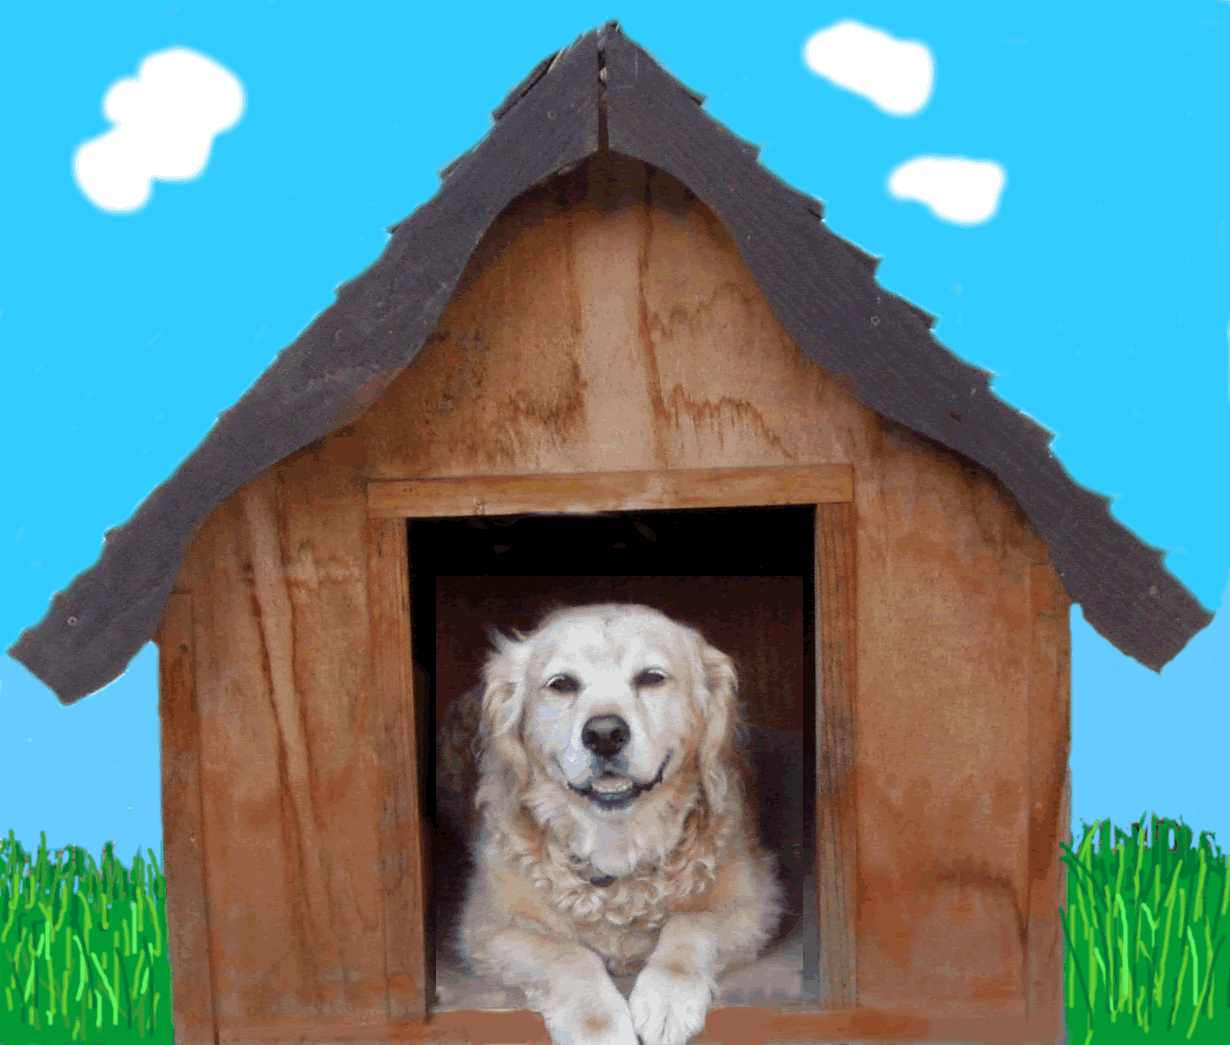 Зе дог хаус демо dog houses info. Dog House. In the Dog House idiom. Мем ипотека суть конура. Dog House meme.